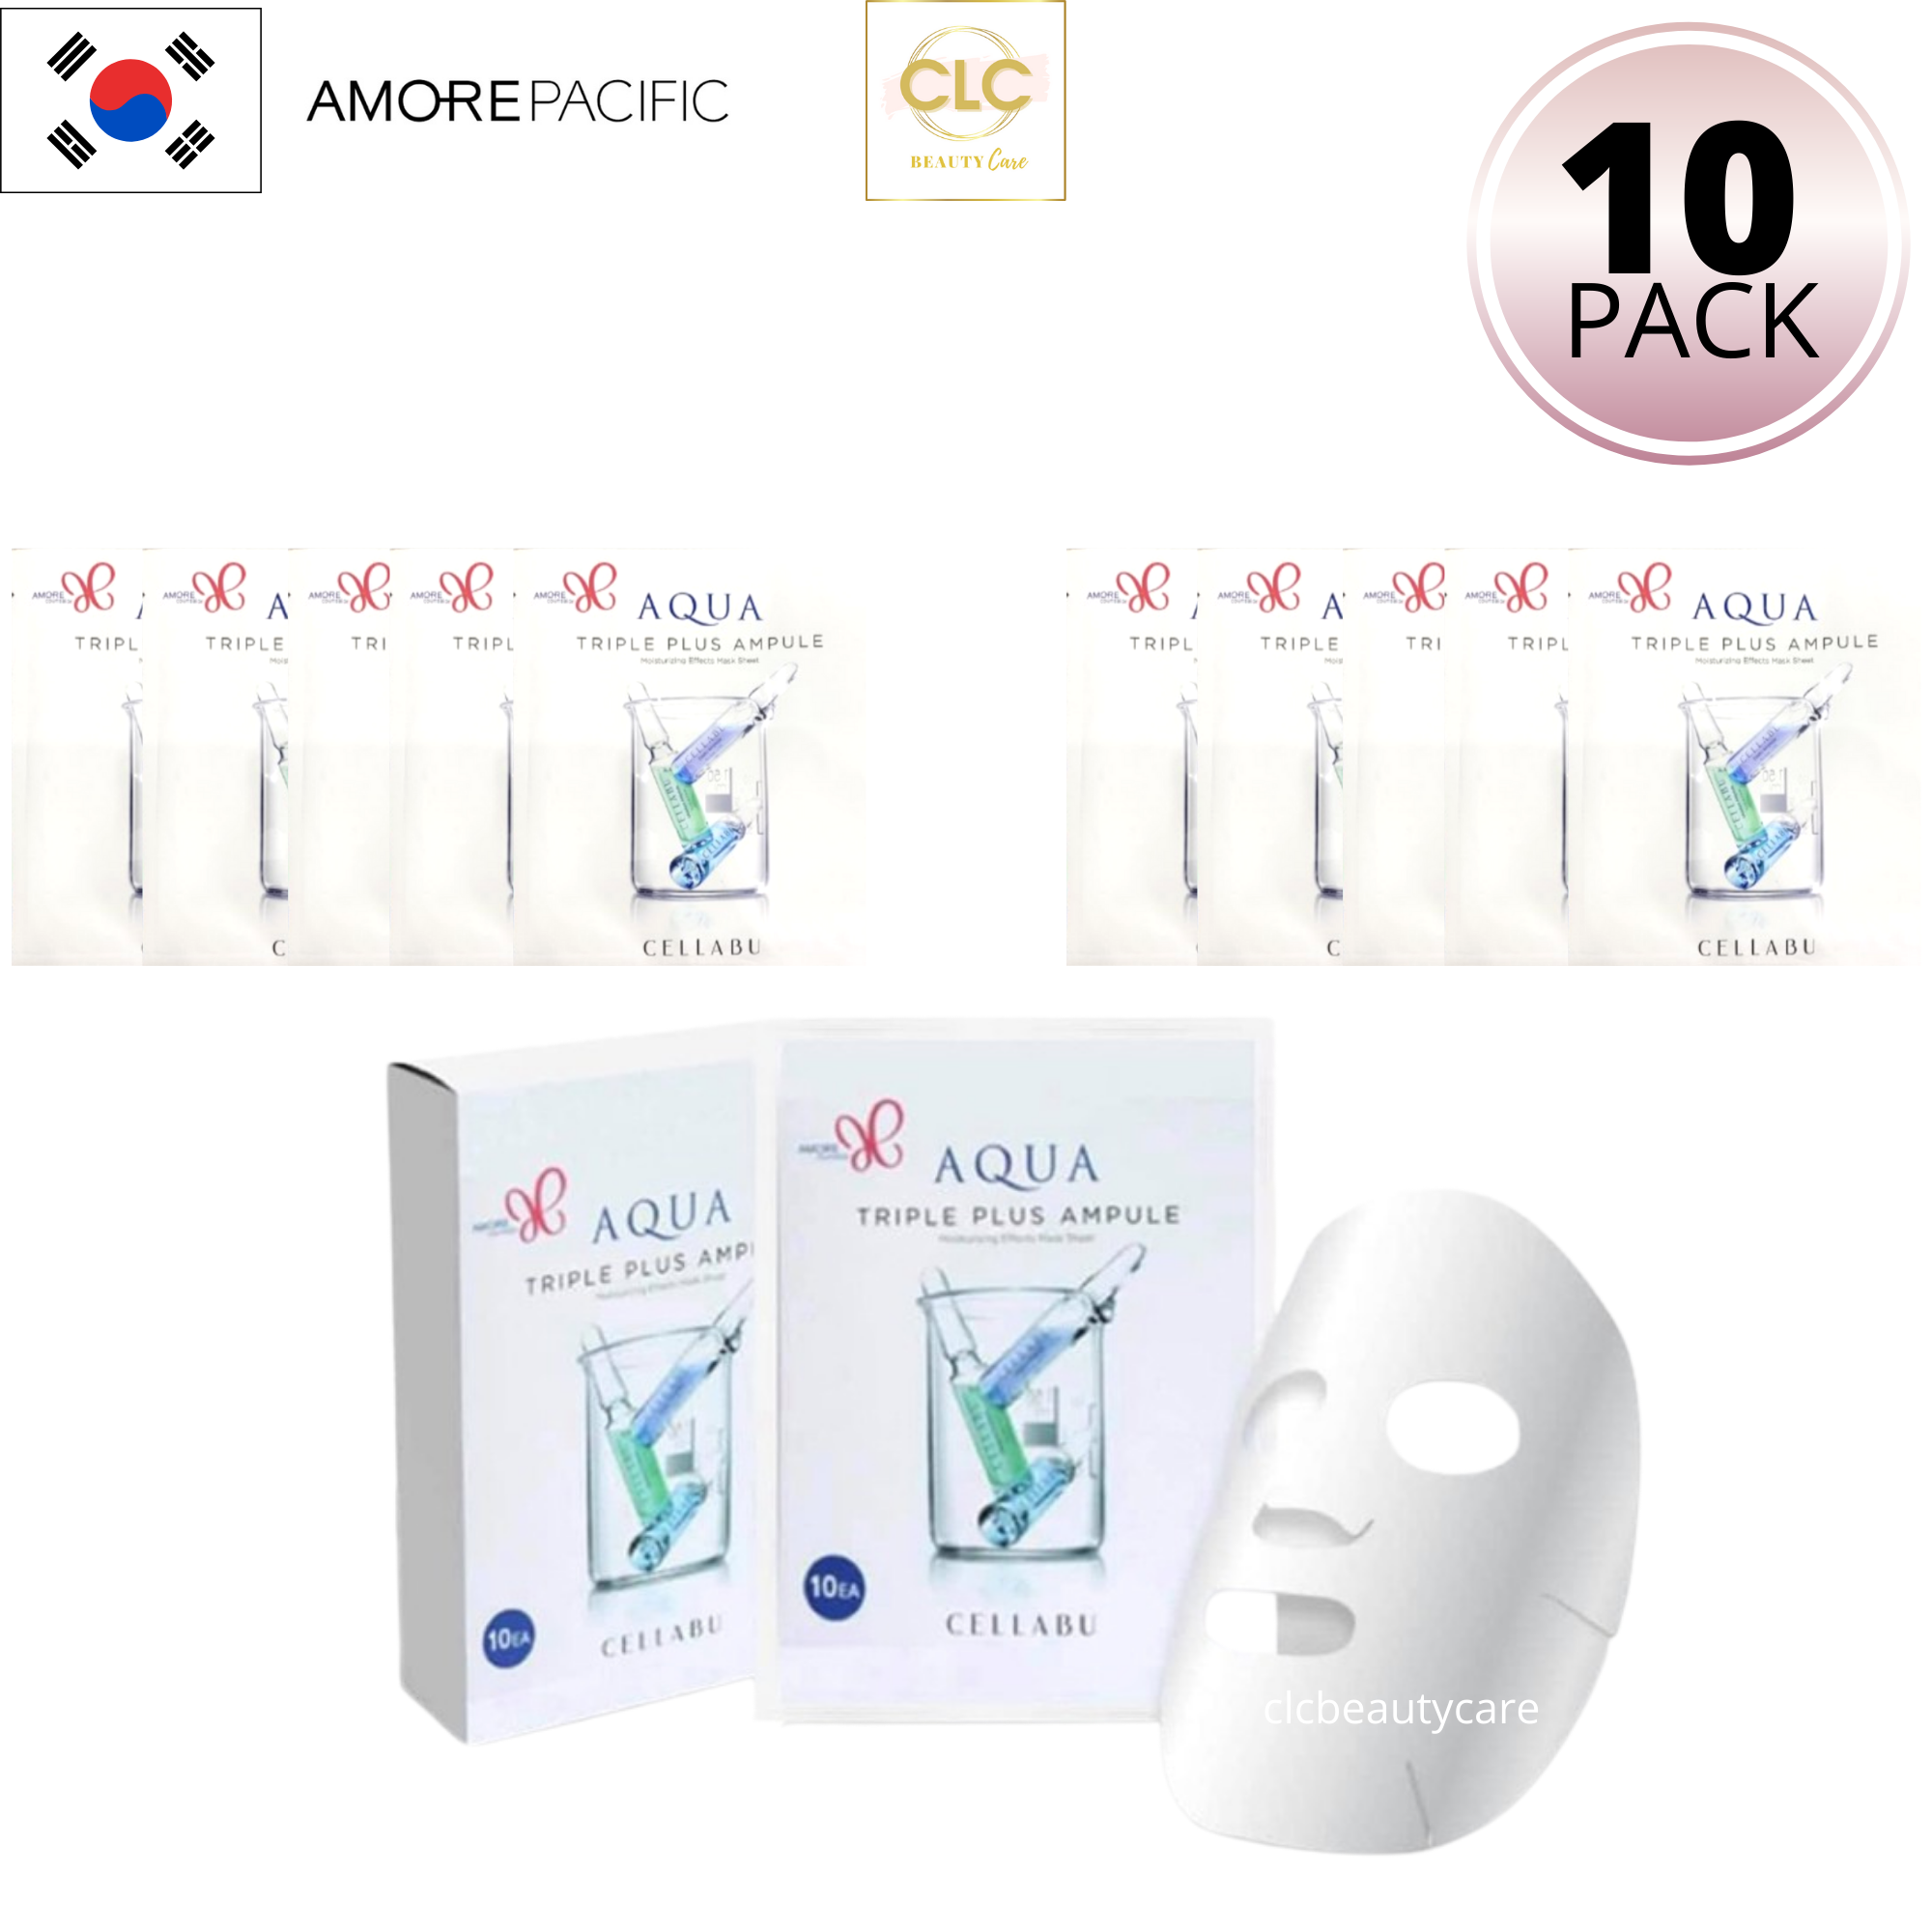 Mặt nạ cấp nước dưỡng trắng da Amore Pacific Aqua Triple Plus Ampule Cellabu Mask - 1 Hộp 10 Masks